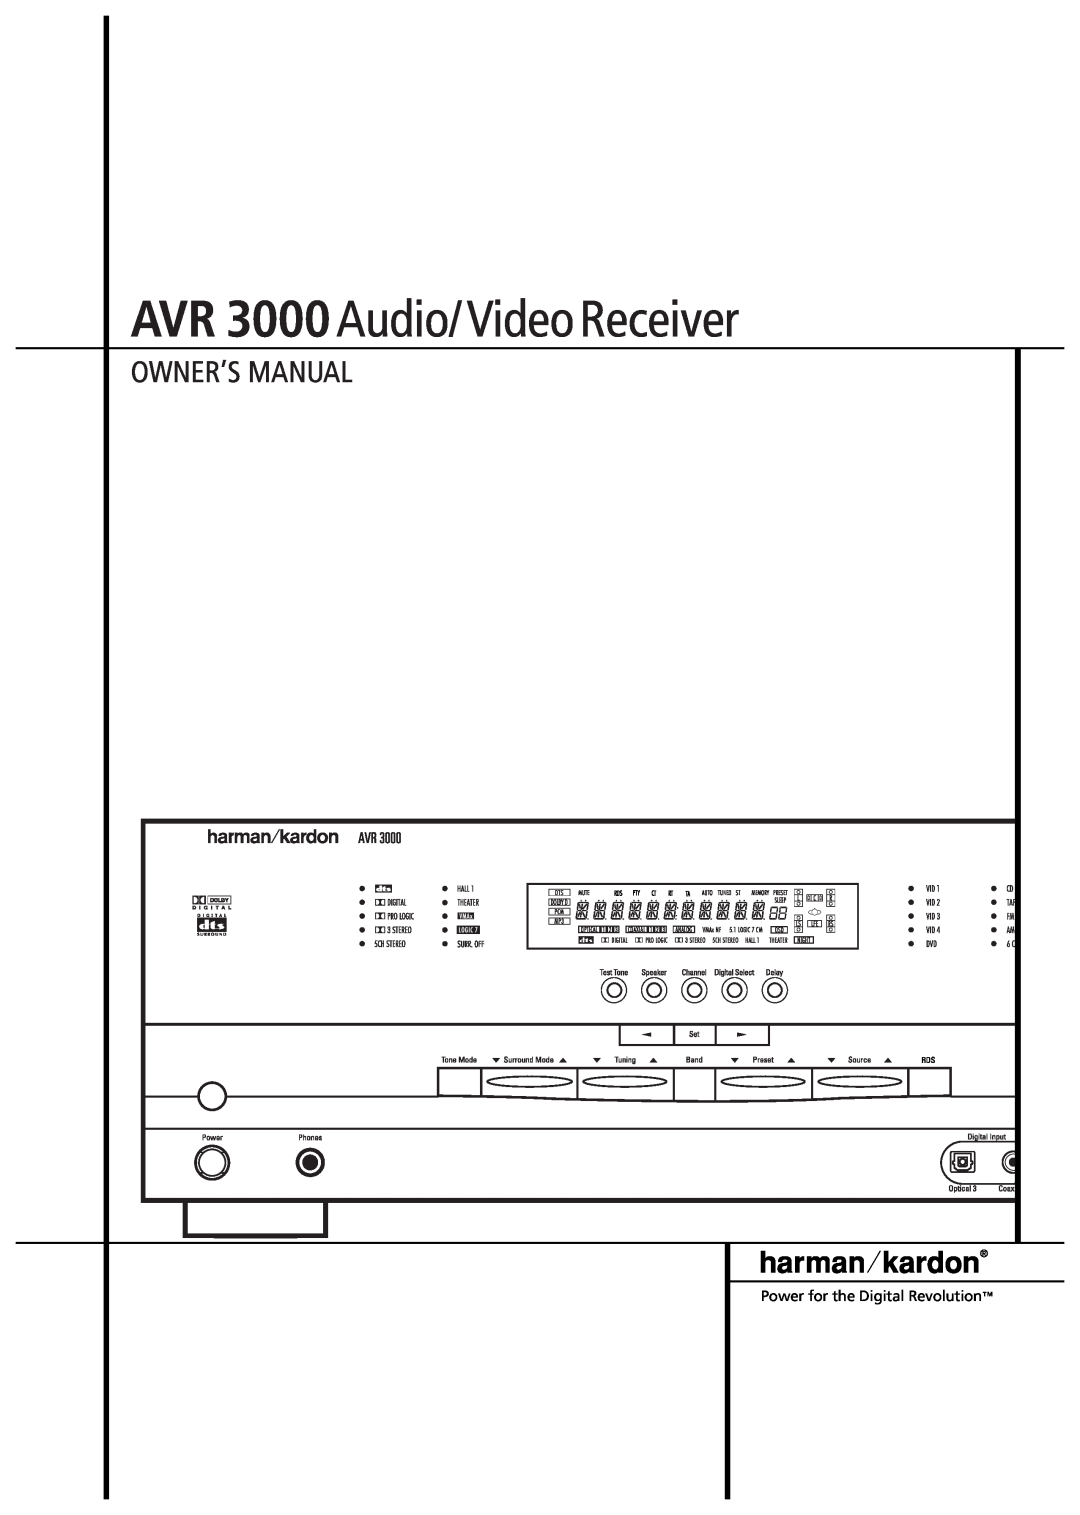 Harman-Kardon owner manual AVR 3000 Audio/ Video Receiver 